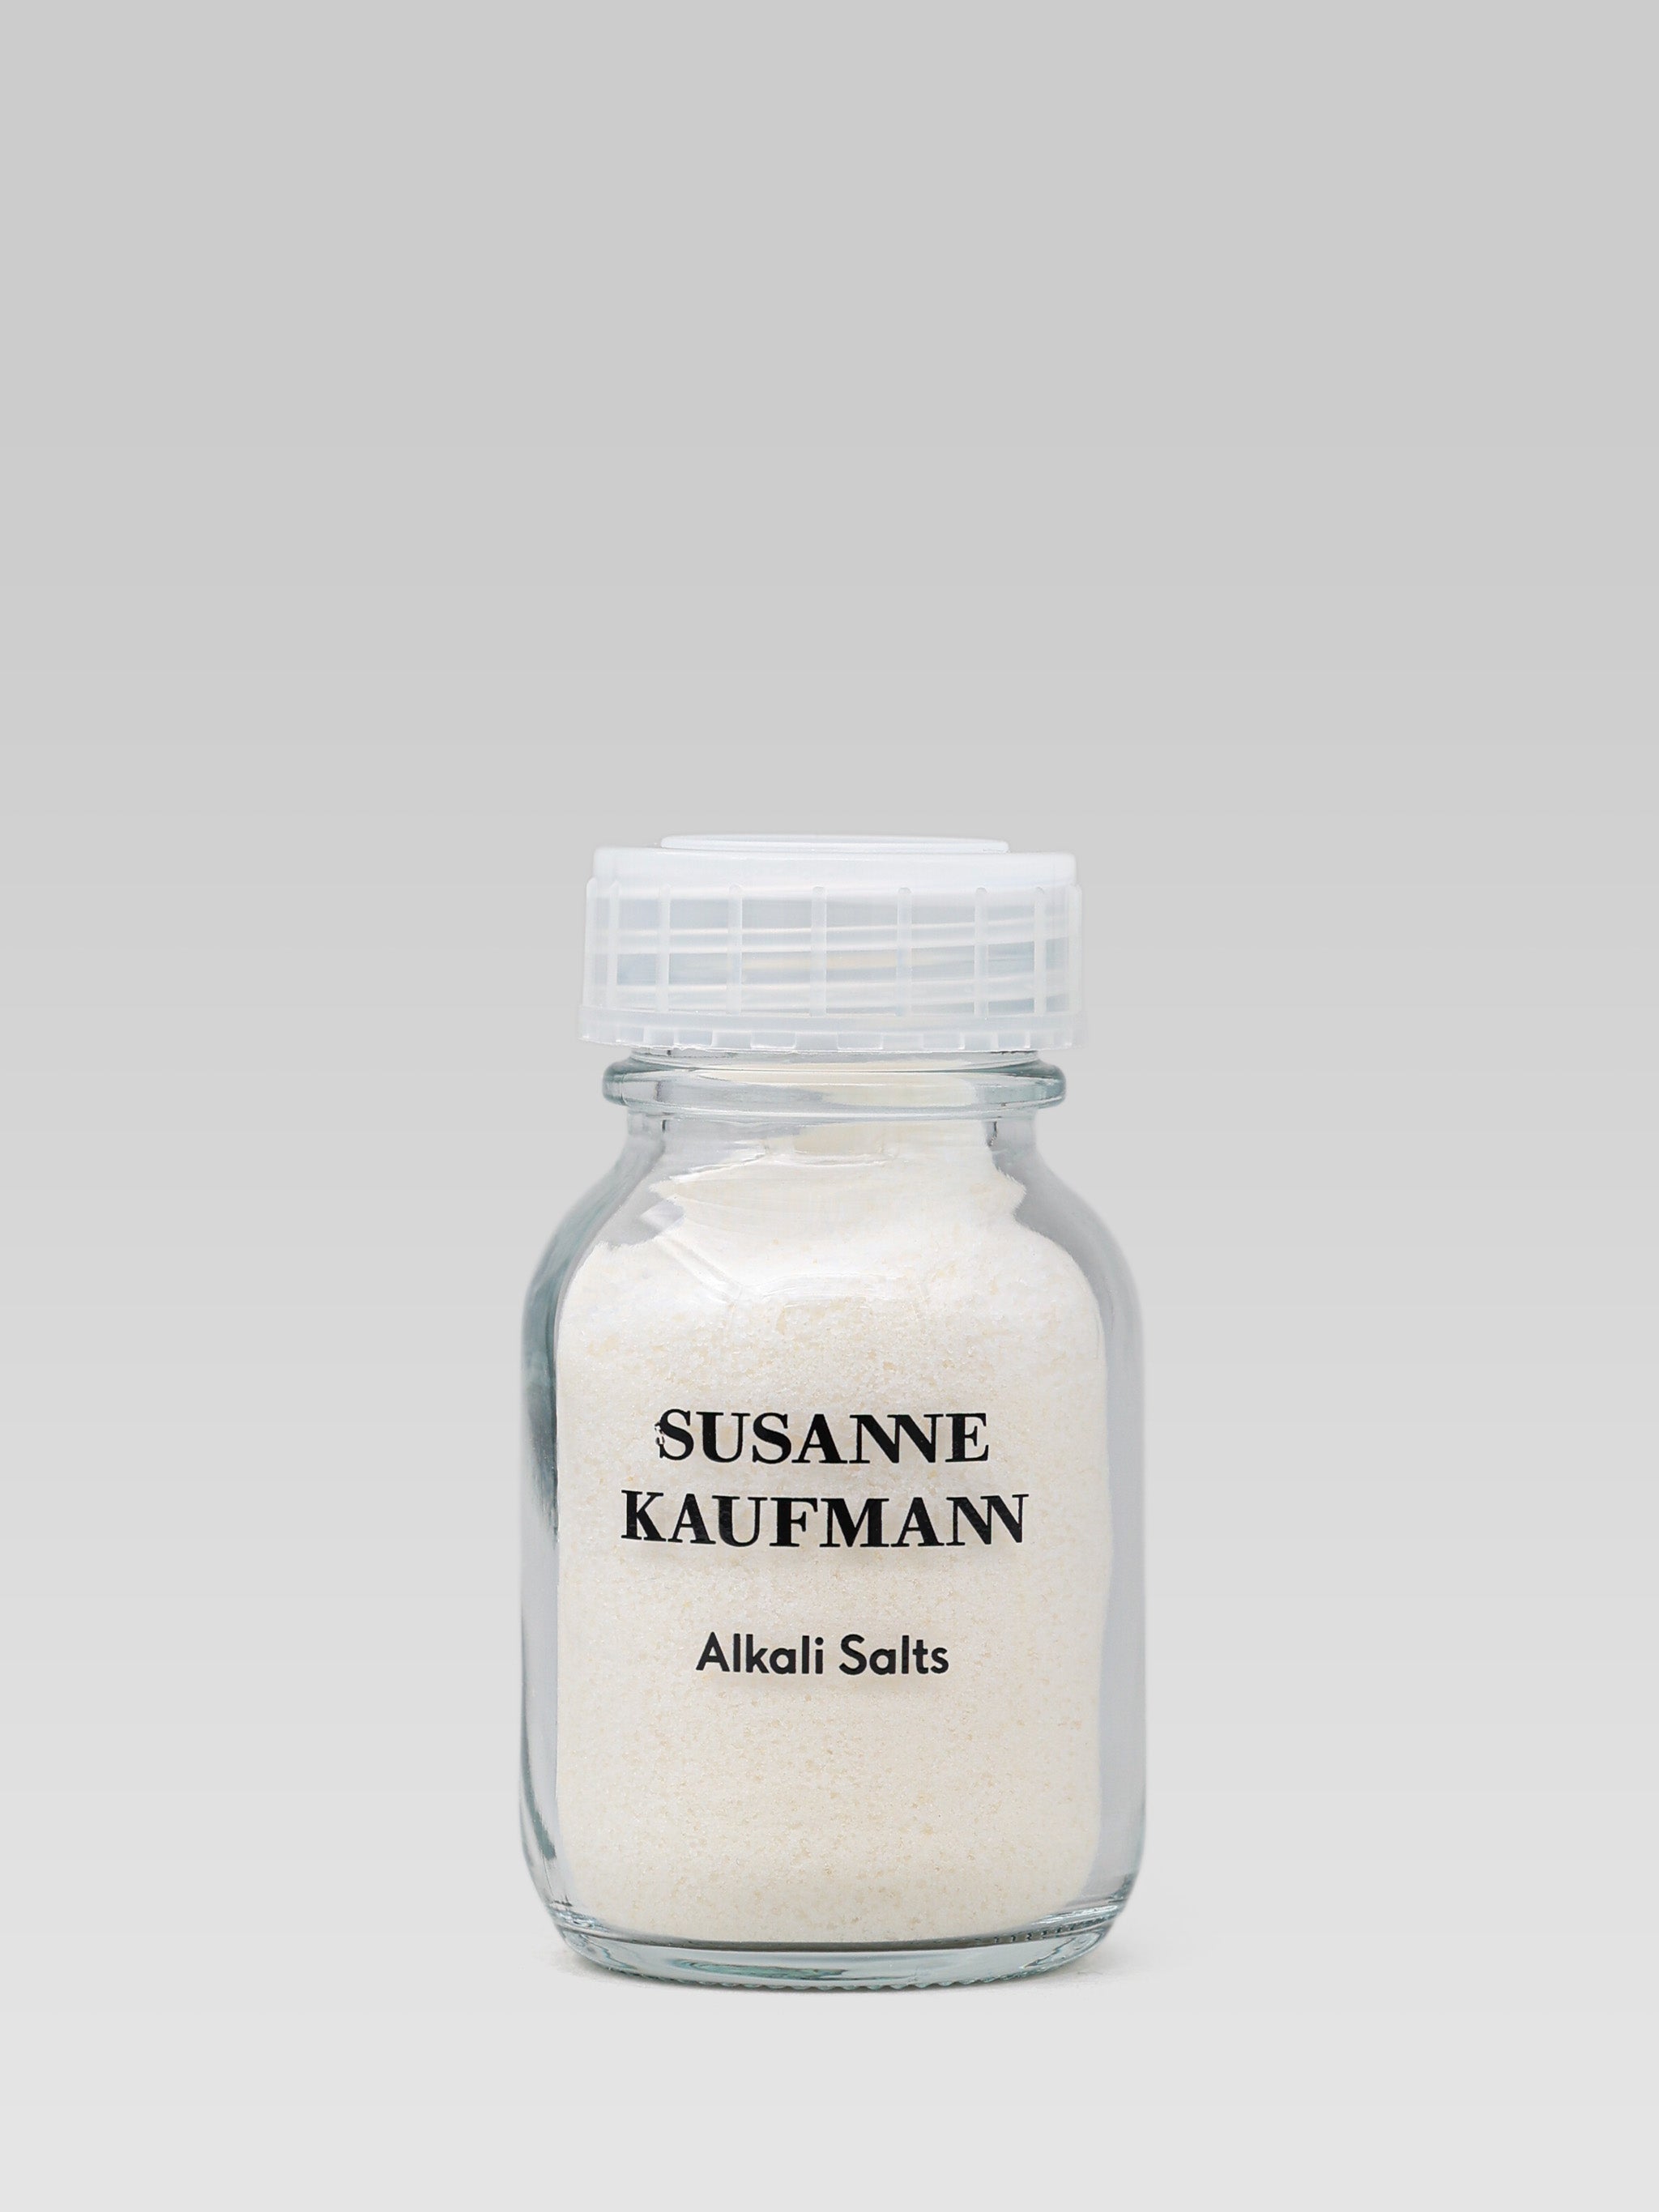 SUSANNE KAUFMANN Alkali Salts